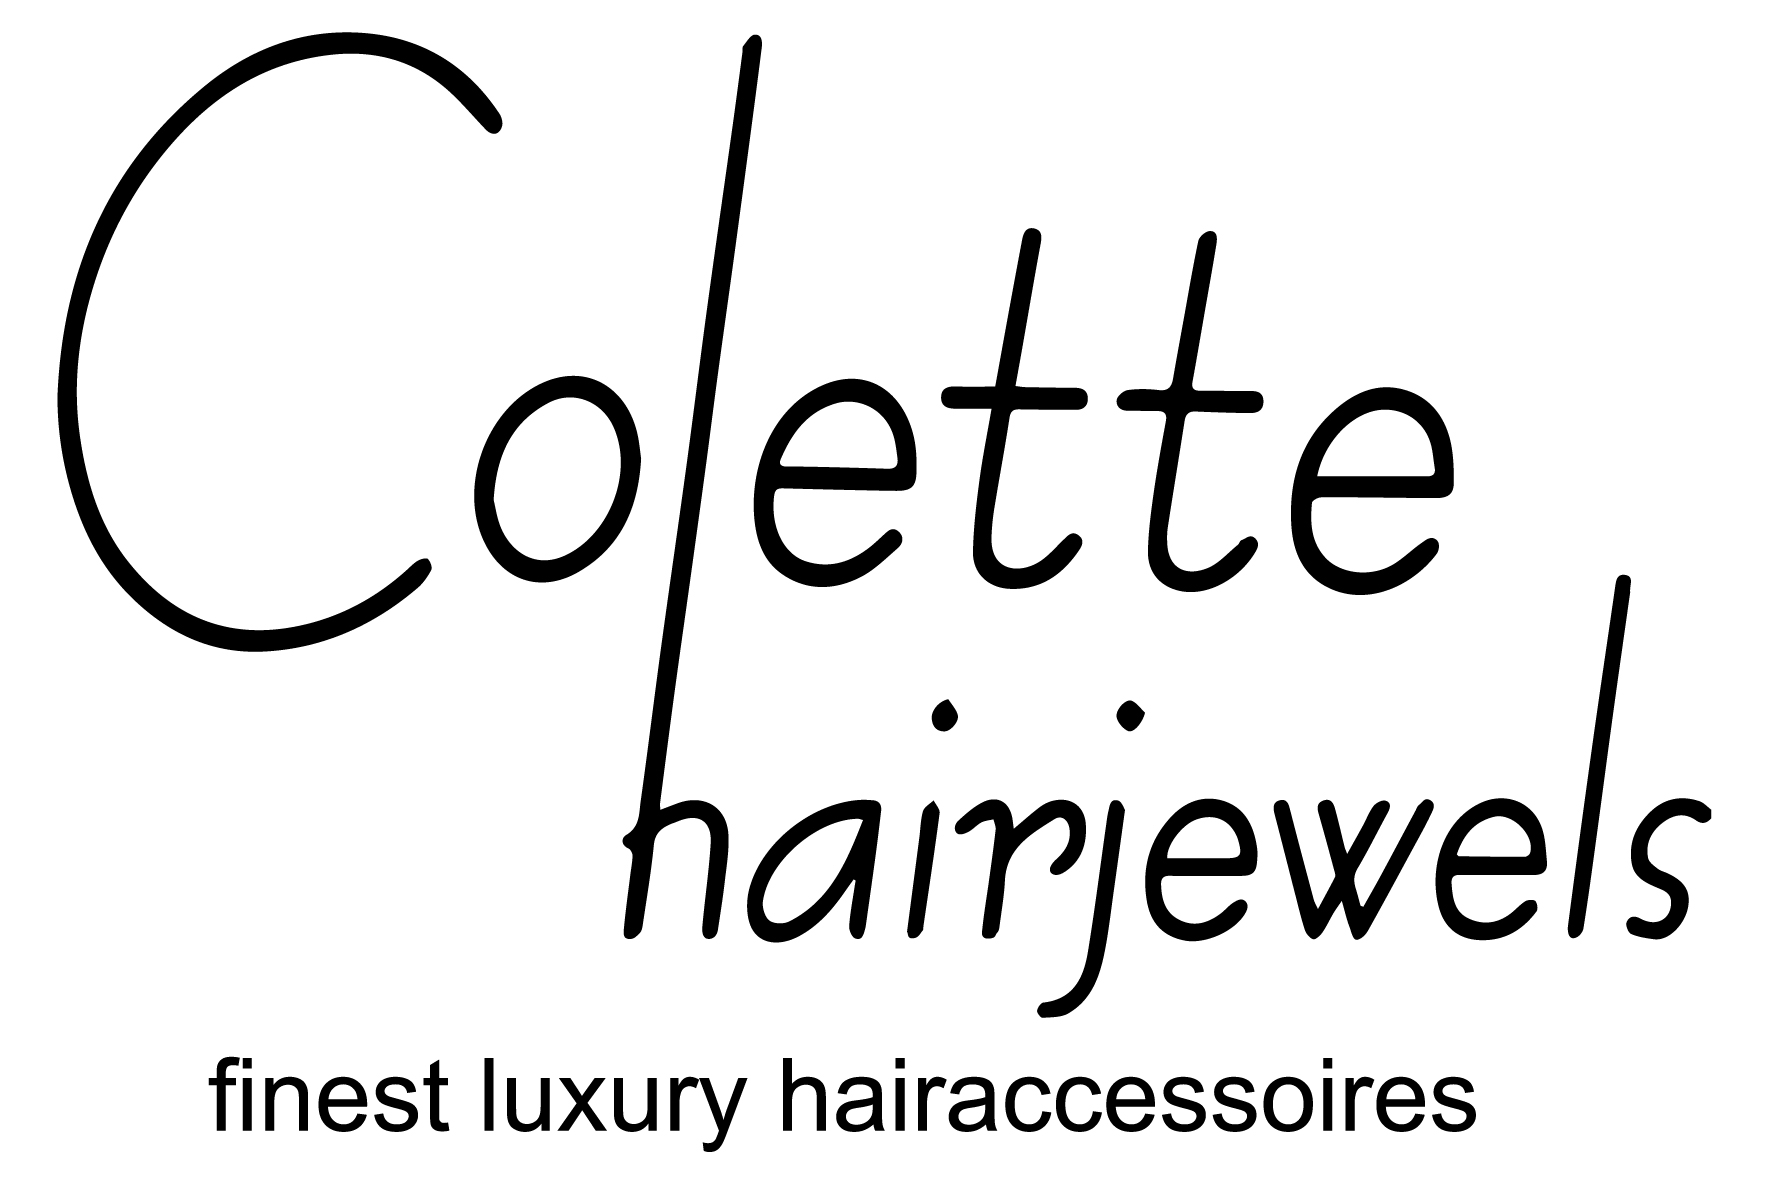 Colette hairjewels